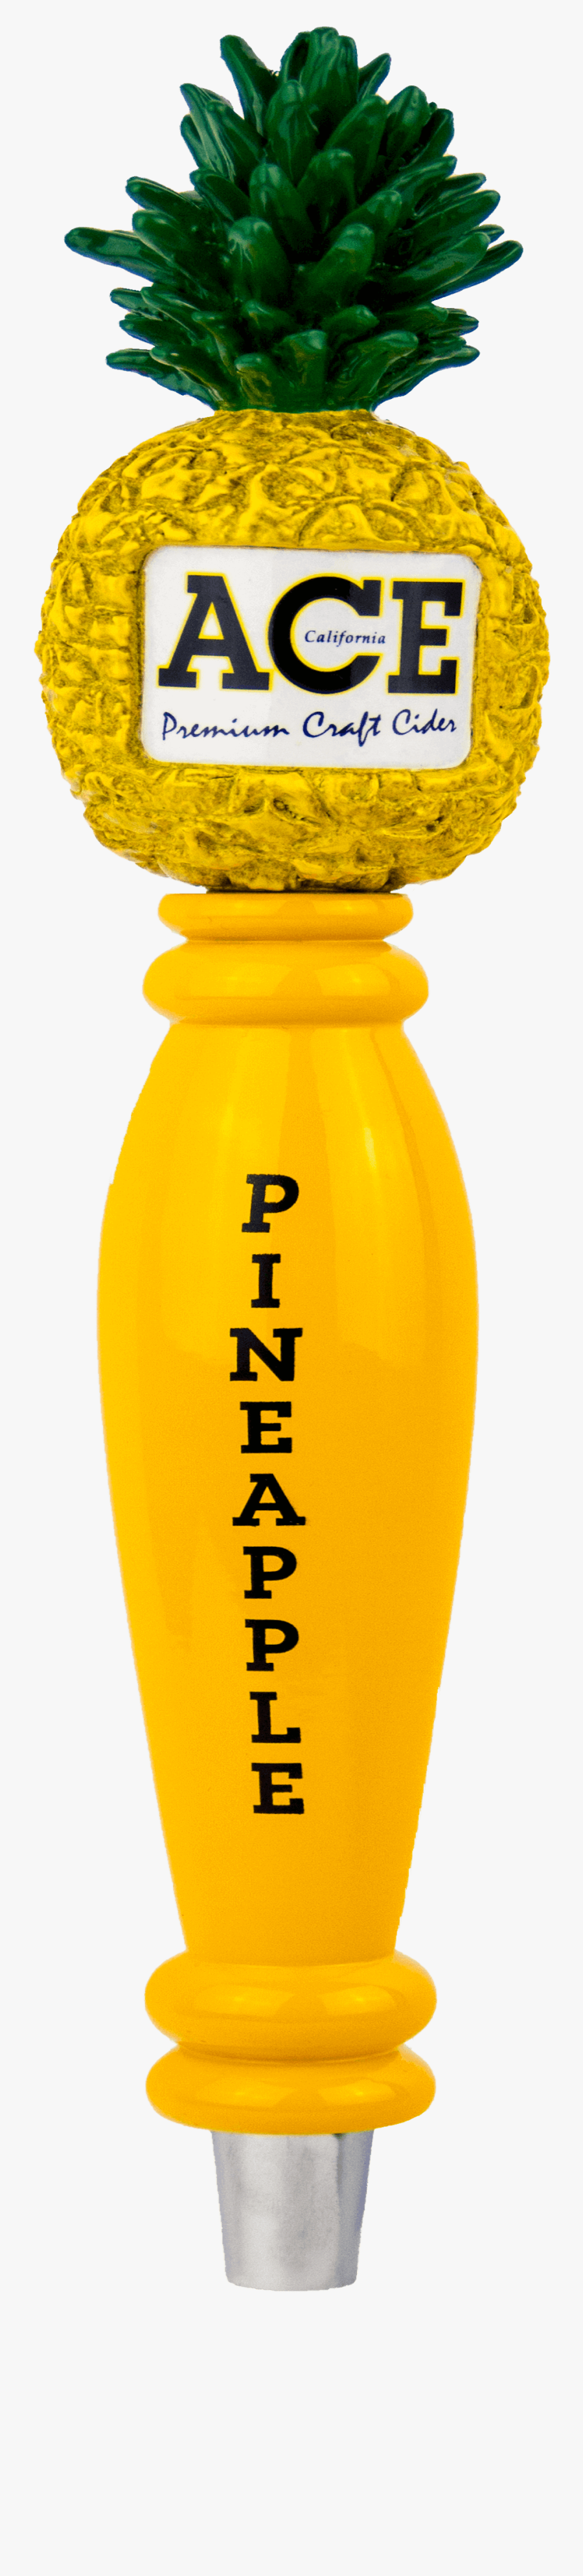 Ace pineapple Tap Handle 3d - Ace Pineapple Cider Tap Handle, Transparent Clipart